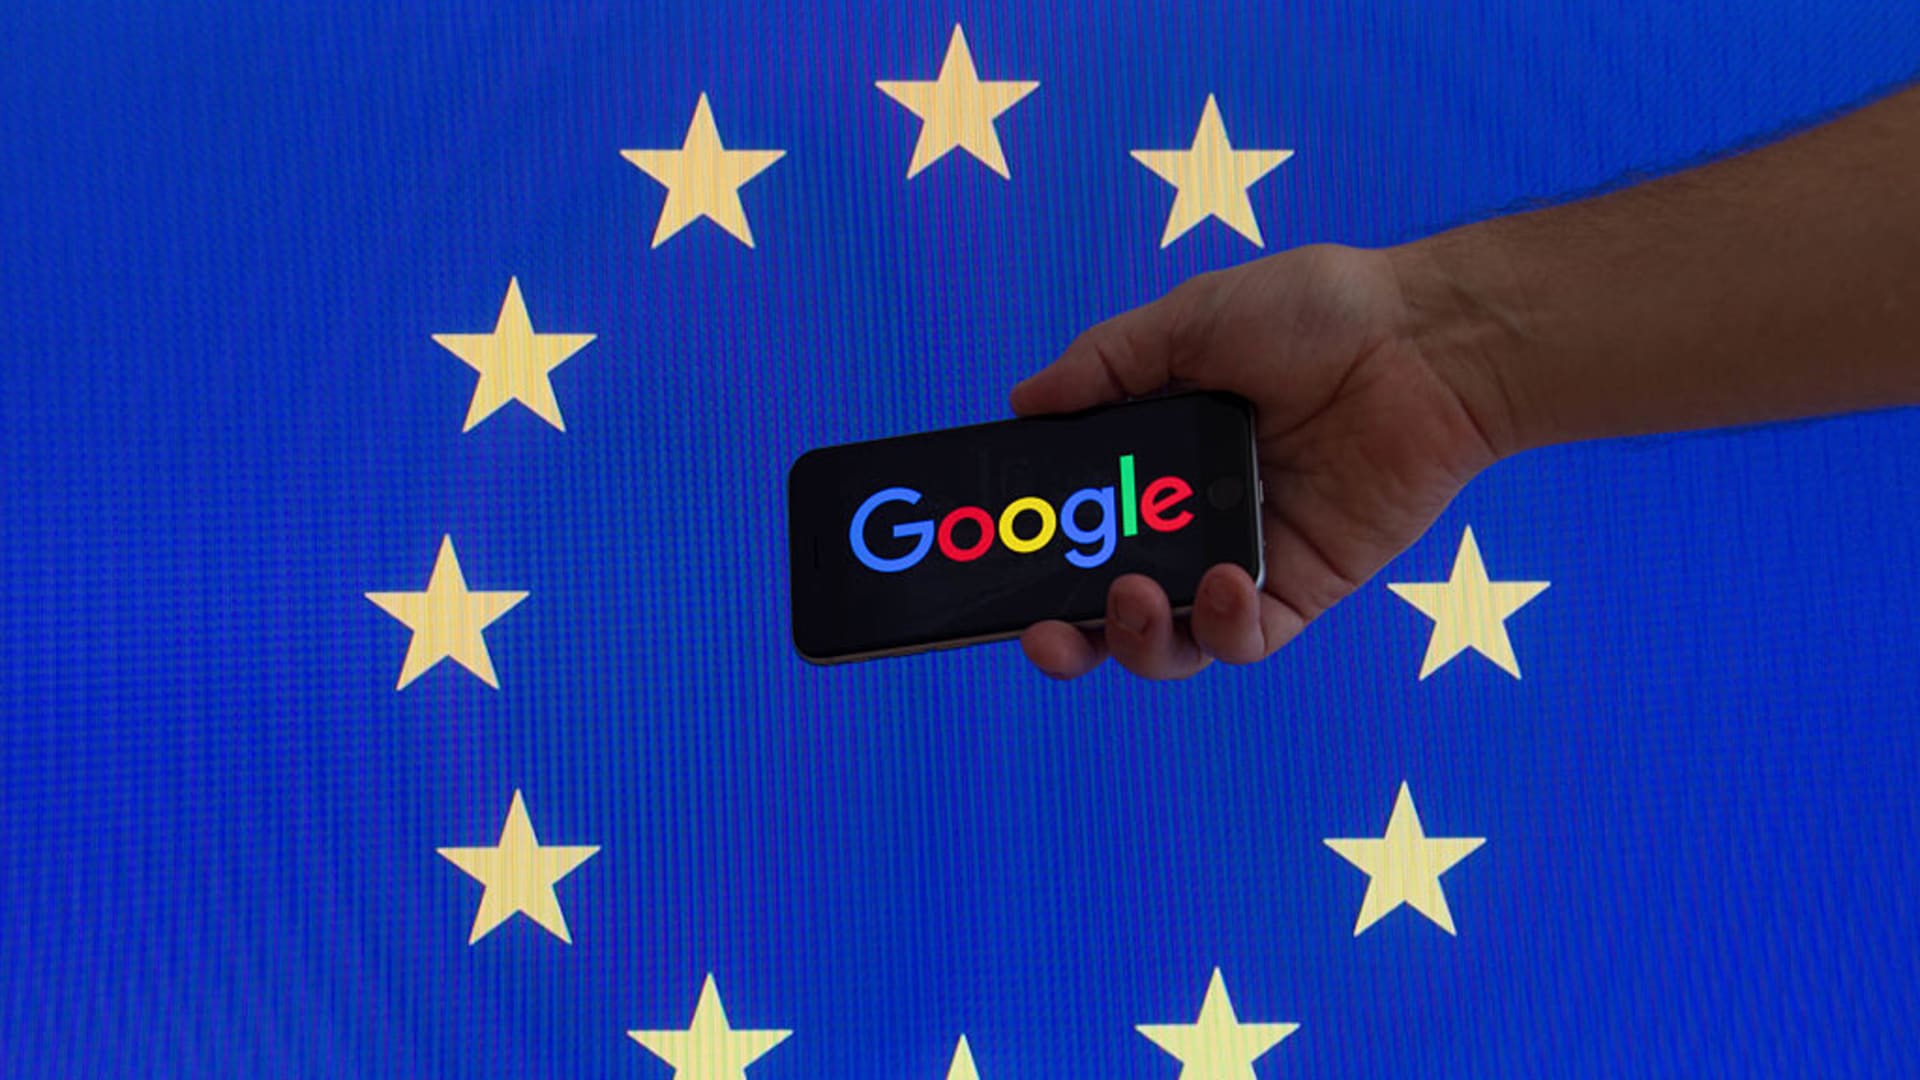 Google loses EU antitrust ruling appeal, fine cut to $4.12 billion